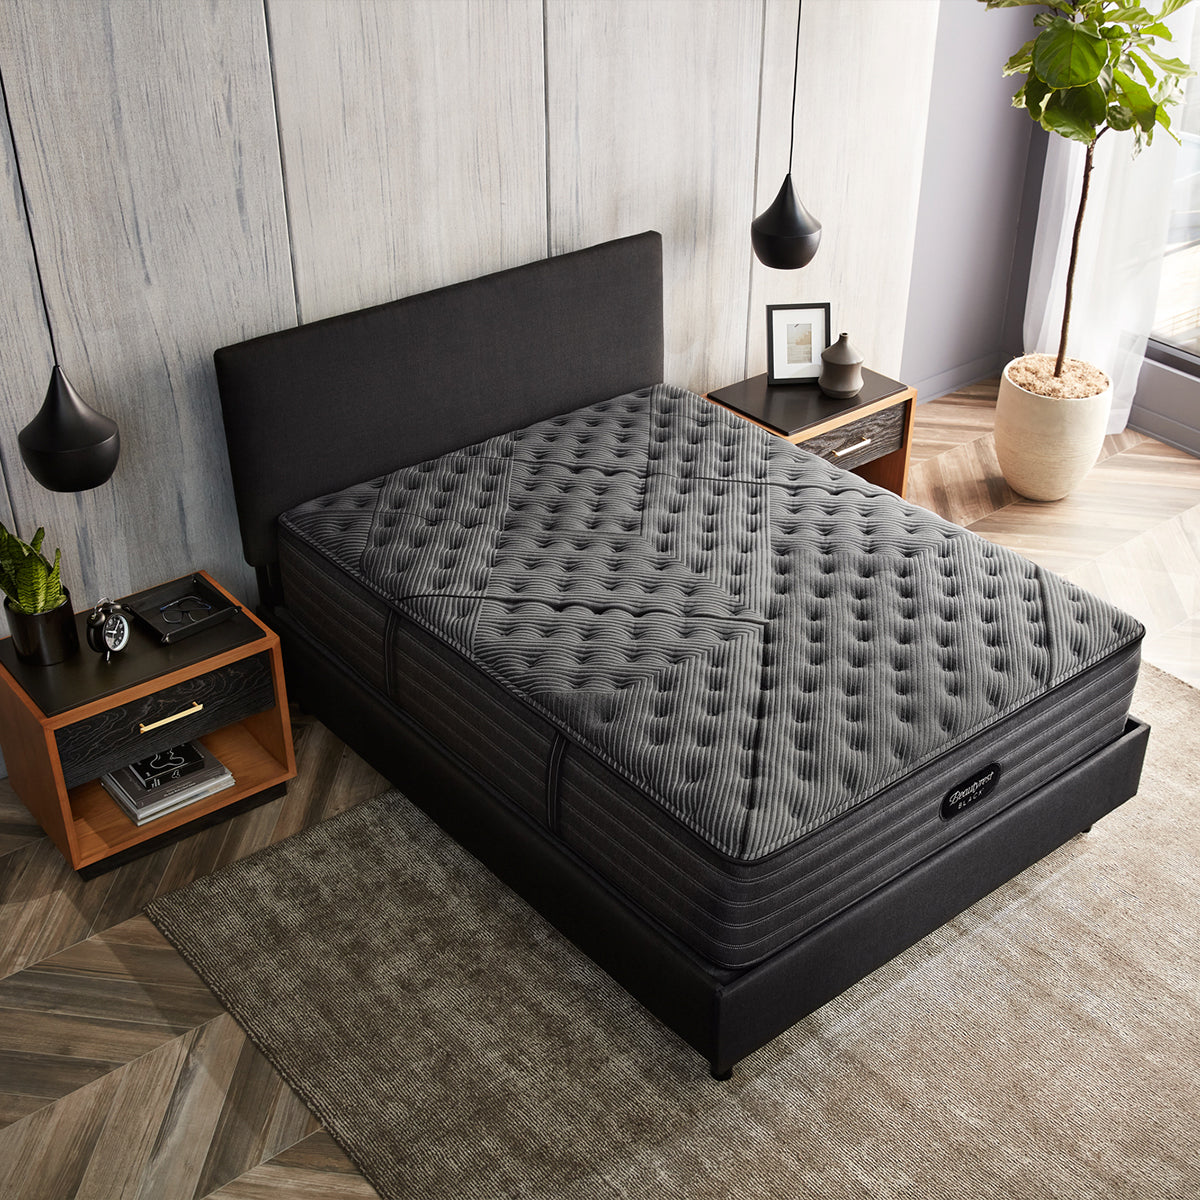 Beautyrest Black K-Class Firm Pillow Top Mattress On Bed Frame In Bedroom Overhead View